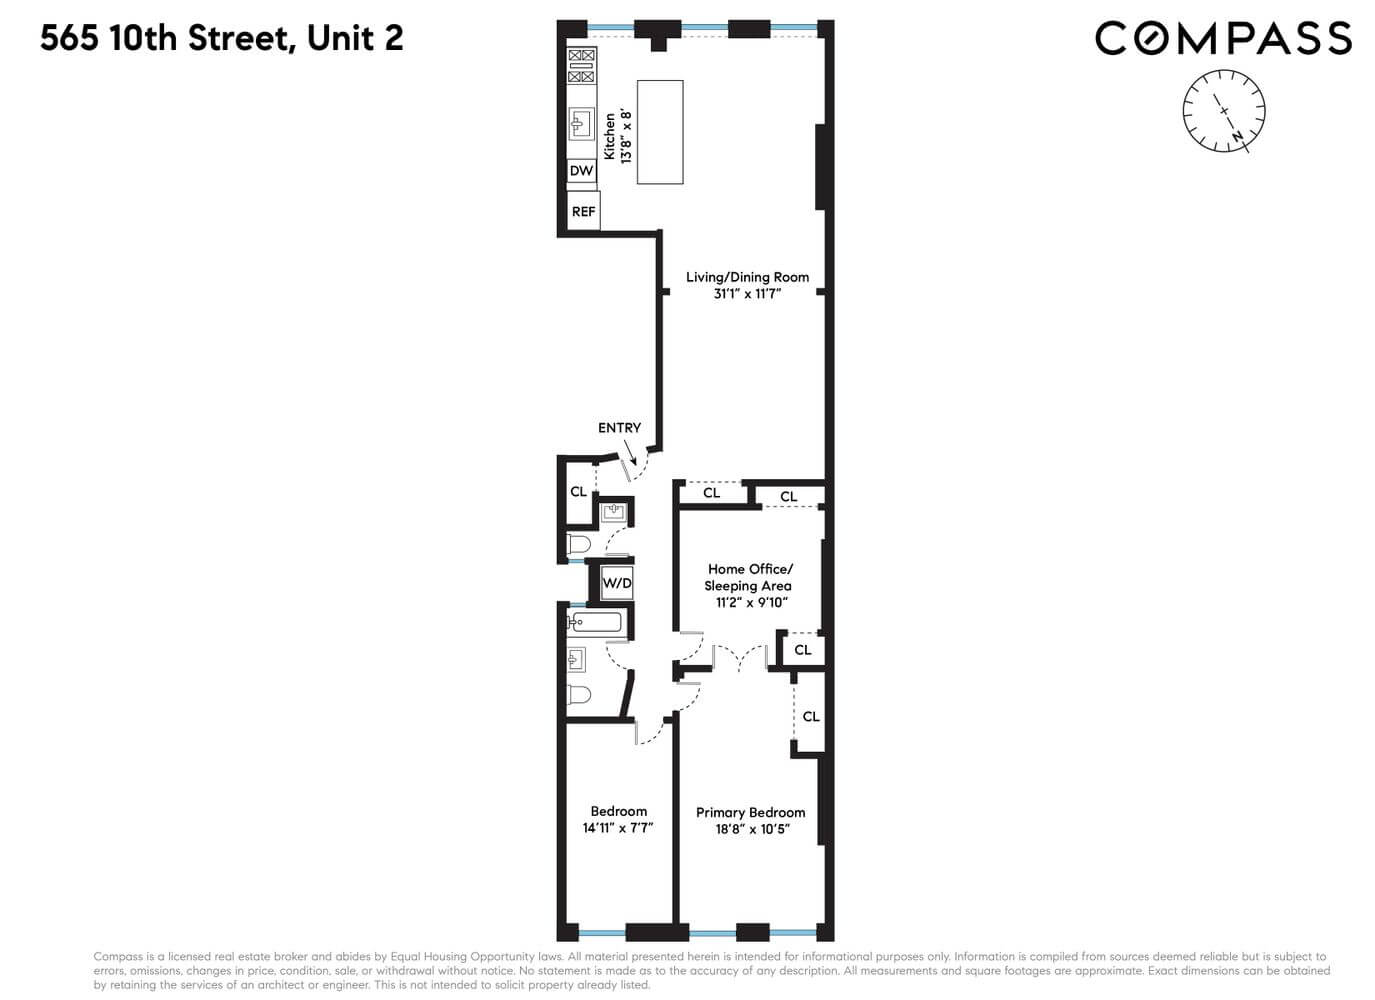 floorplan of 565 10th street unit 2